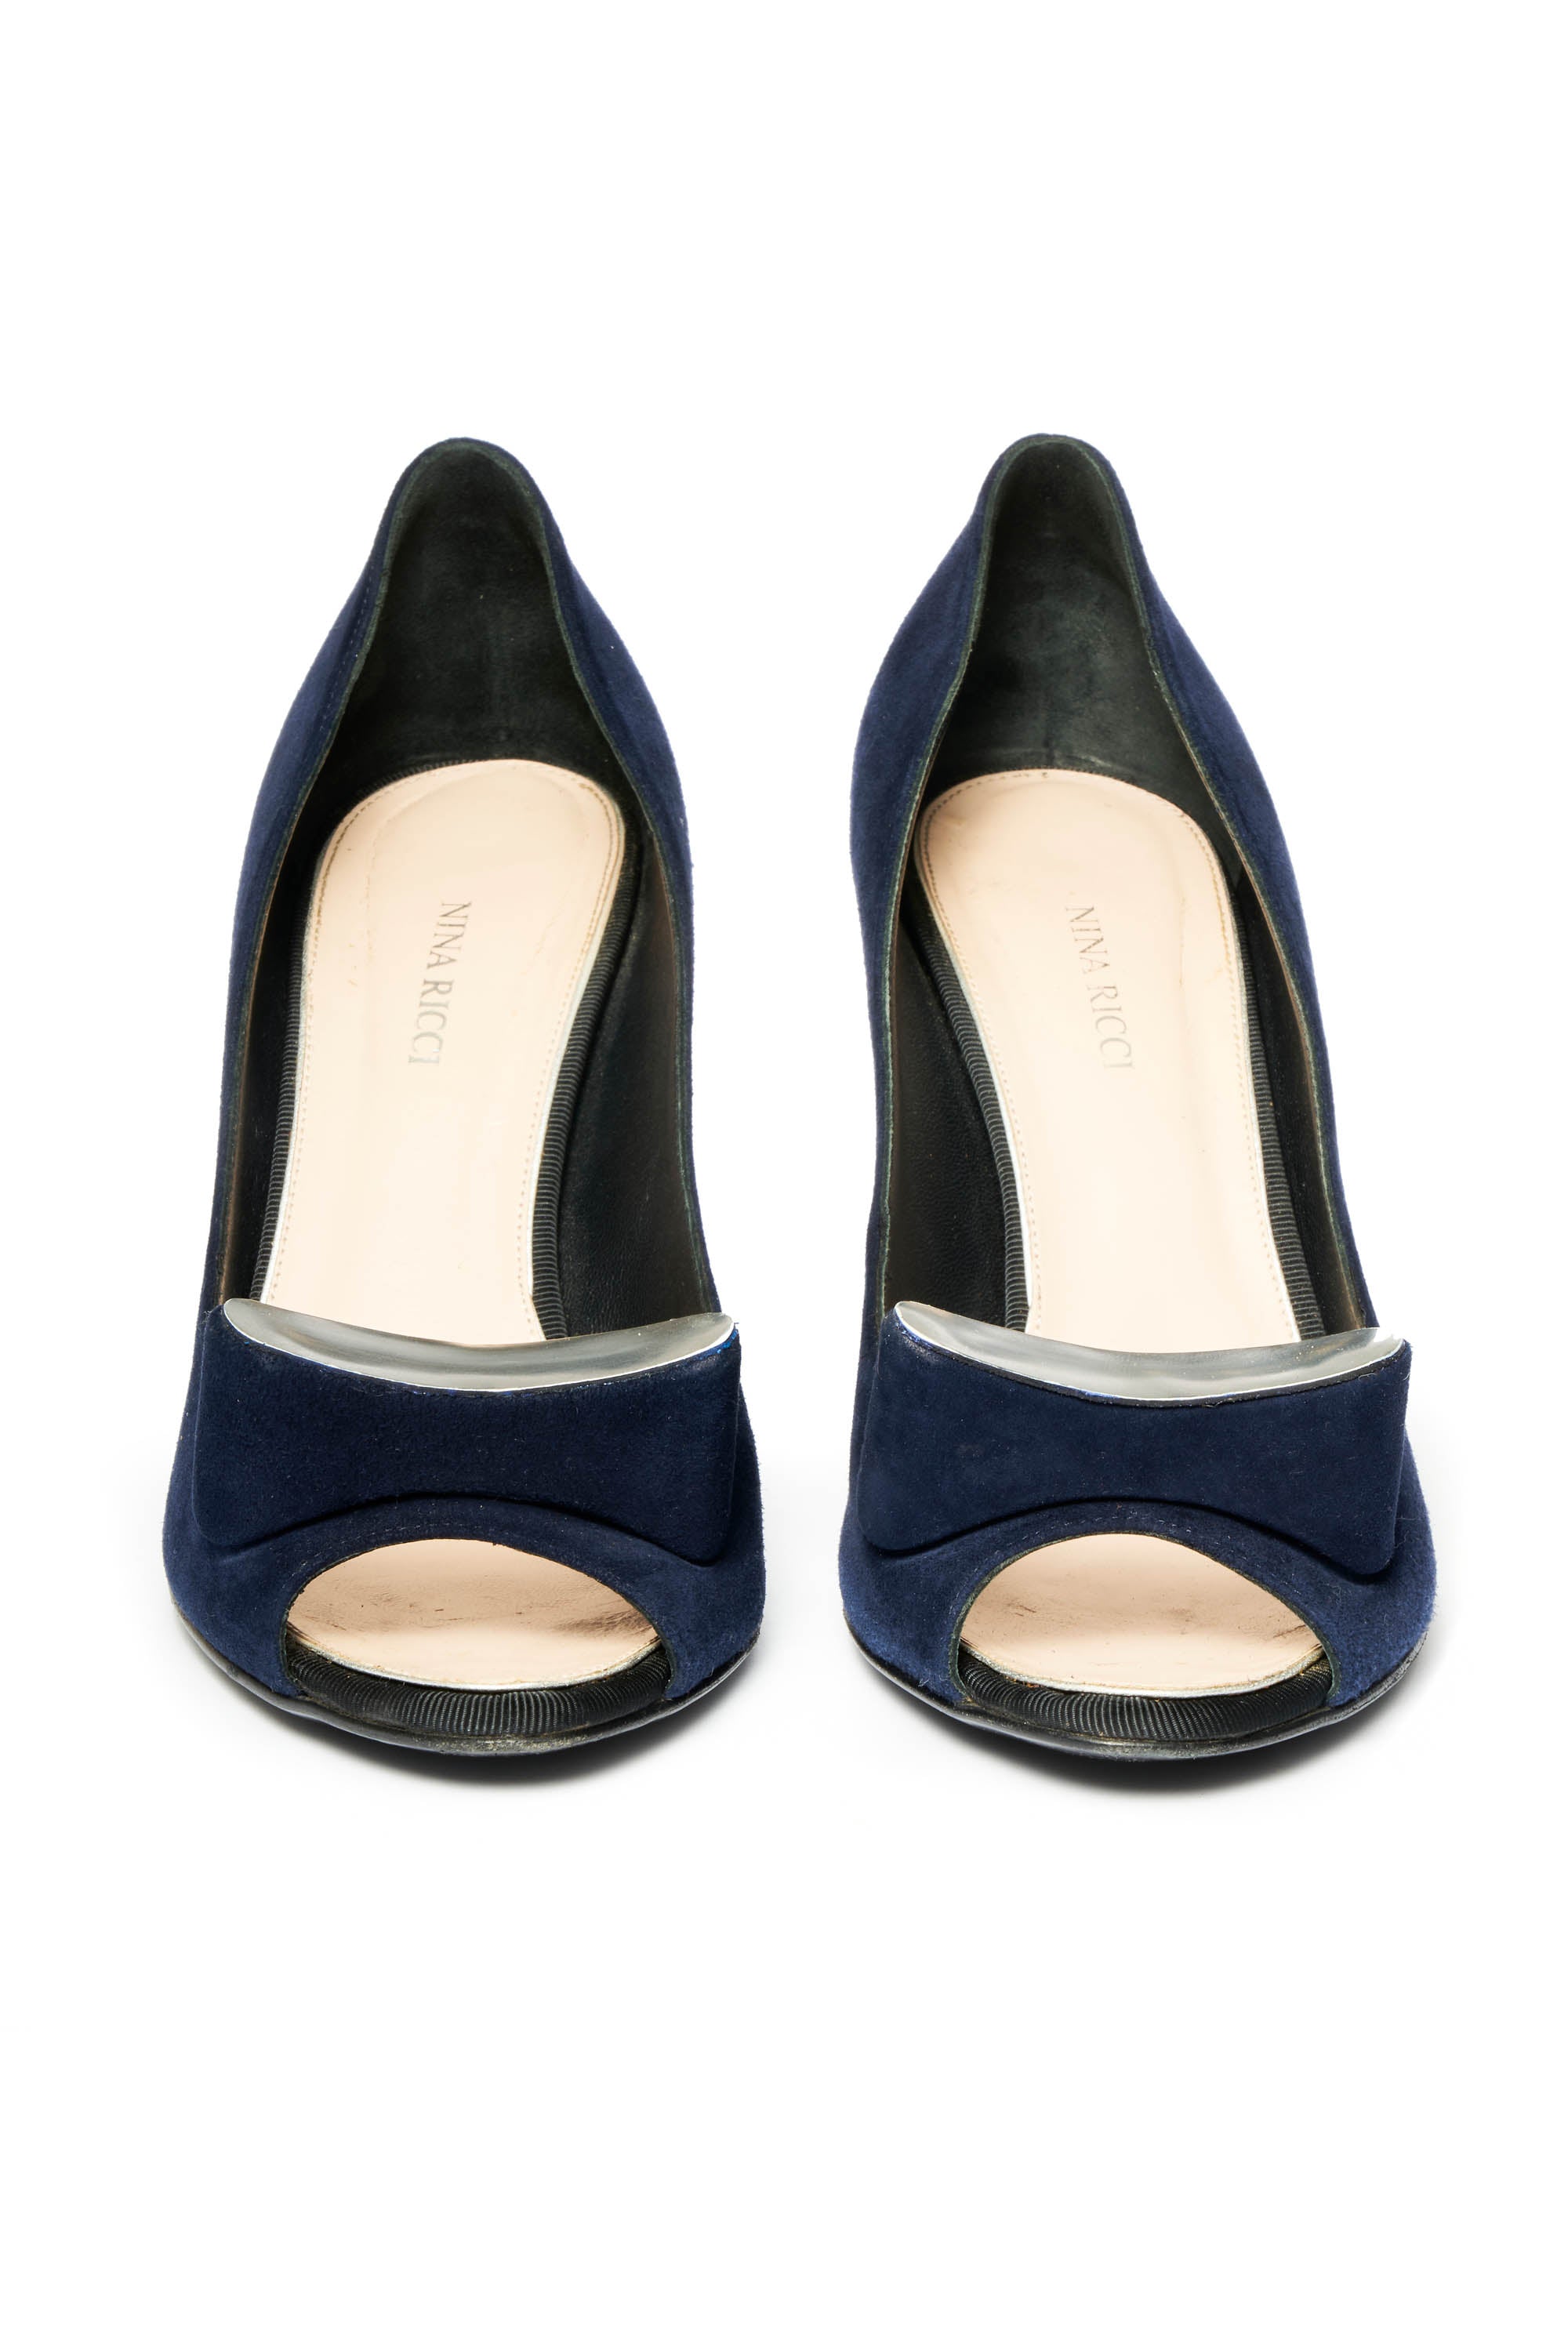 Nina Ricci Blue Suede Peep Toe Pump Size 38 - Foxy Couture Carmel